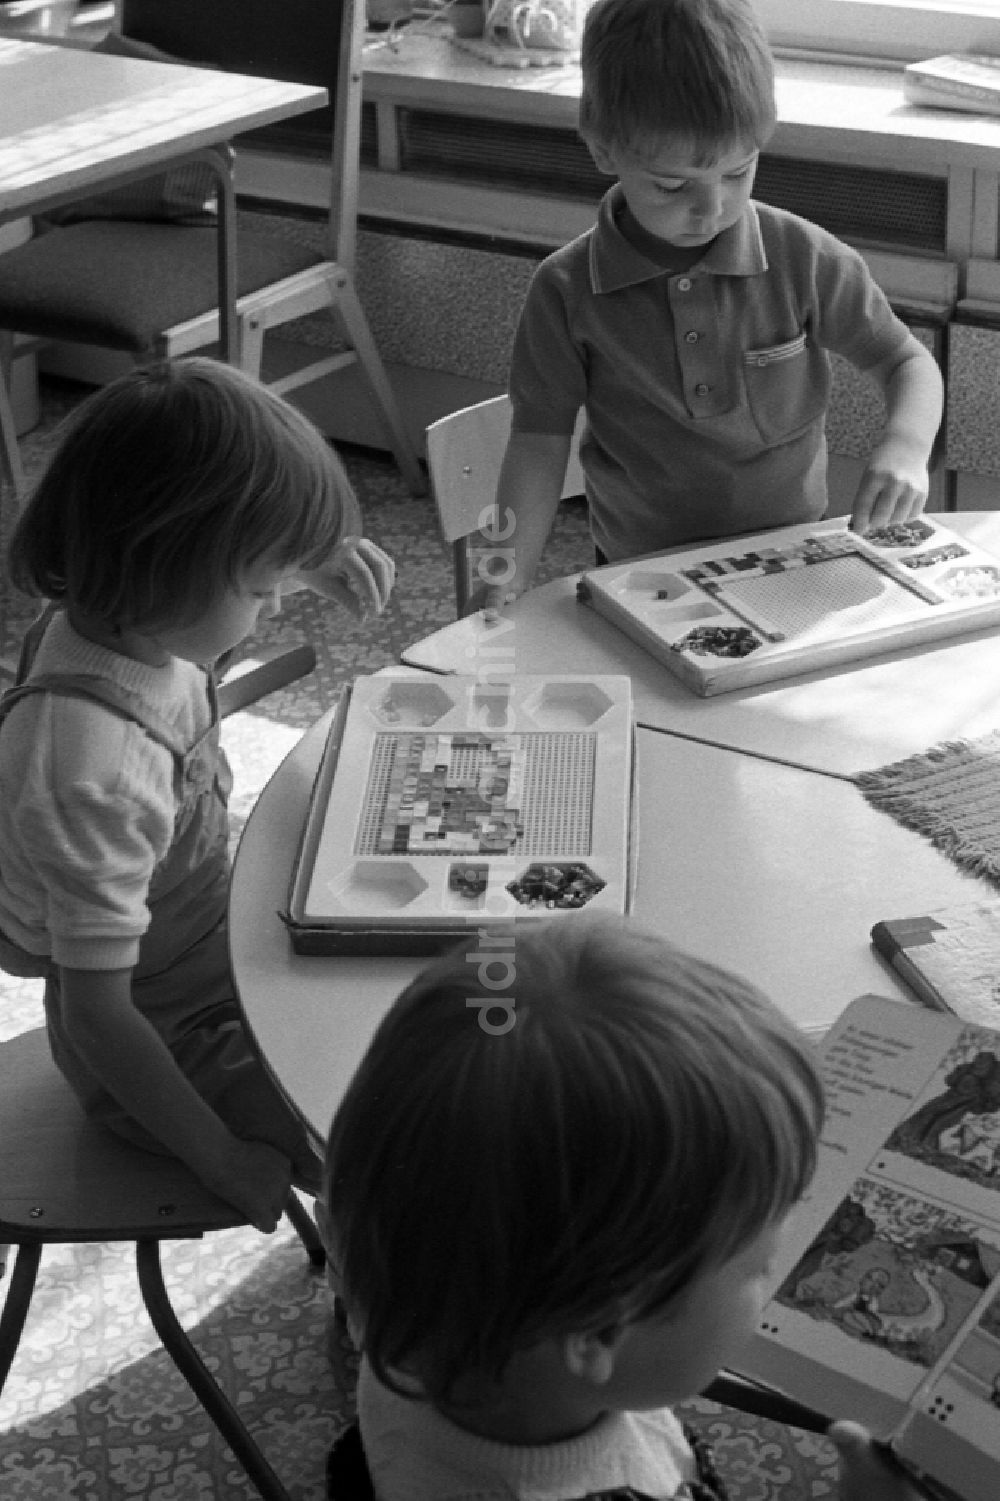 DDR-Fotoarchiv: Berlin - Kindergarten in Berlin auf dem Gebiet der ehemaligen DDR, Deutsche Demokratische Republik